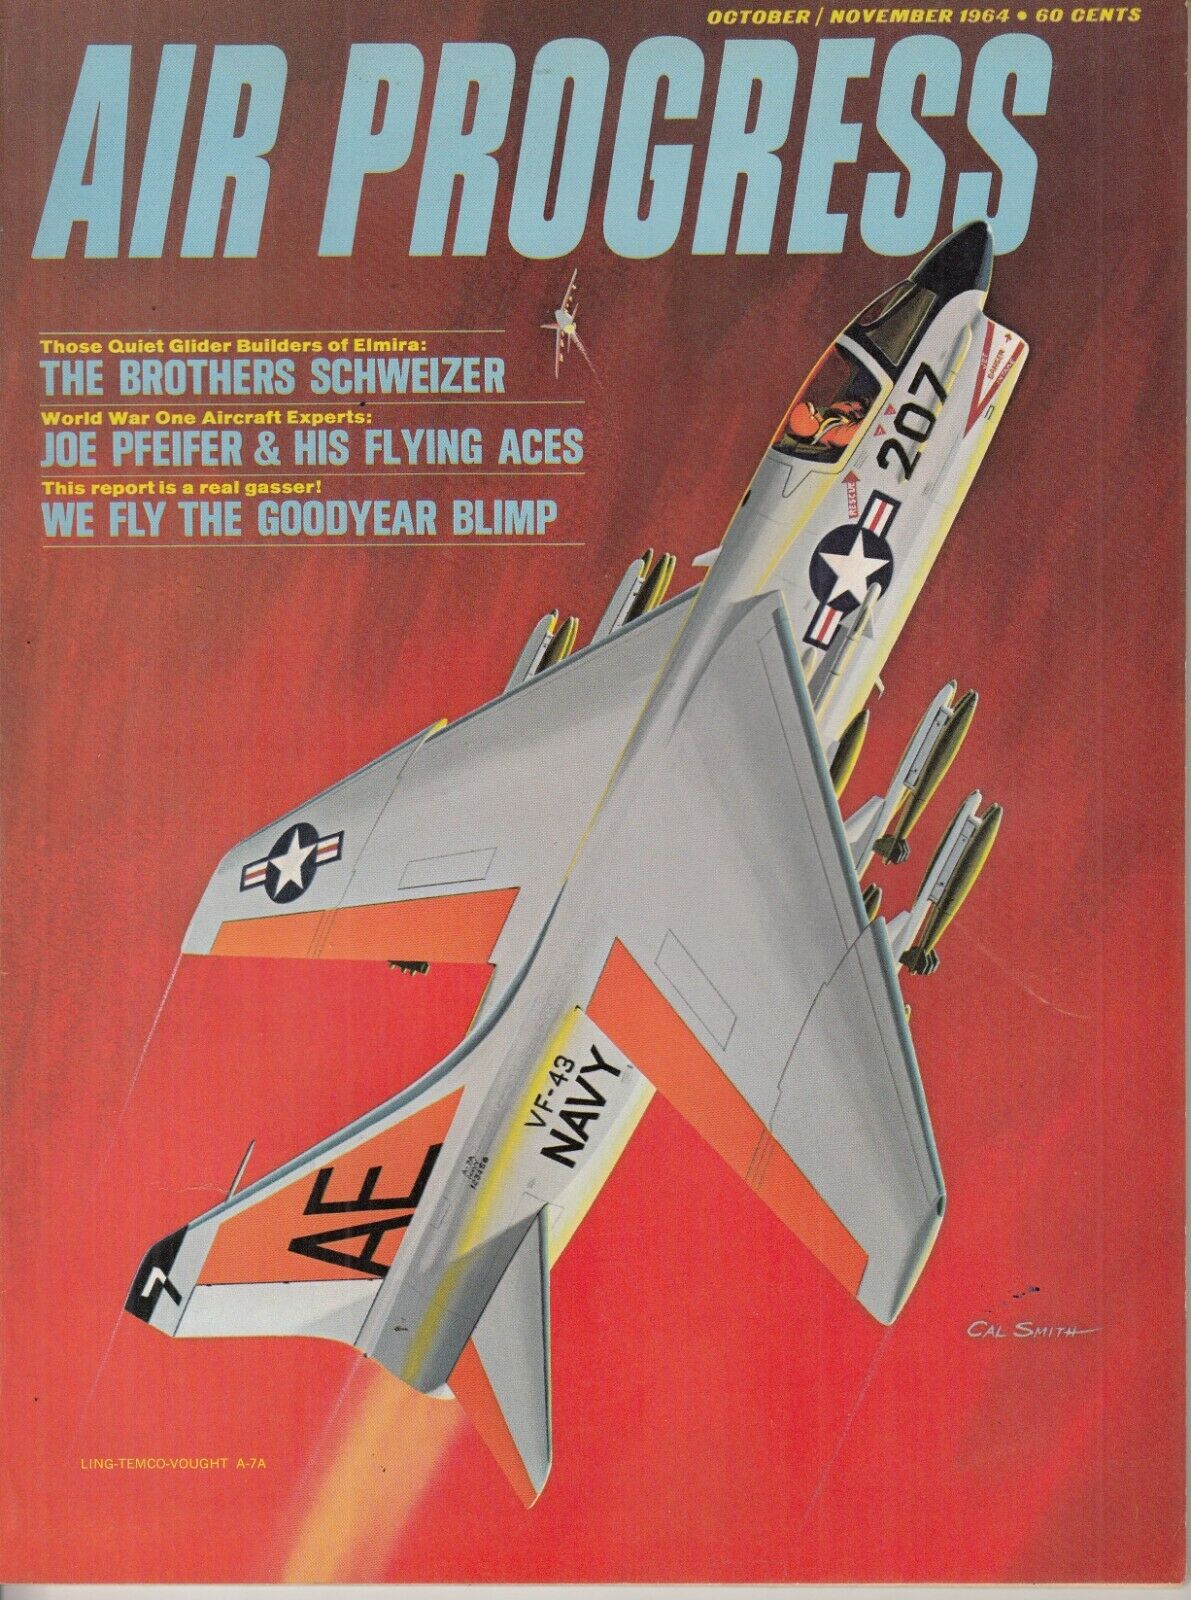 Air Progress Magazine October/November, 1964-The Goodyear Blimp - Flying Aces